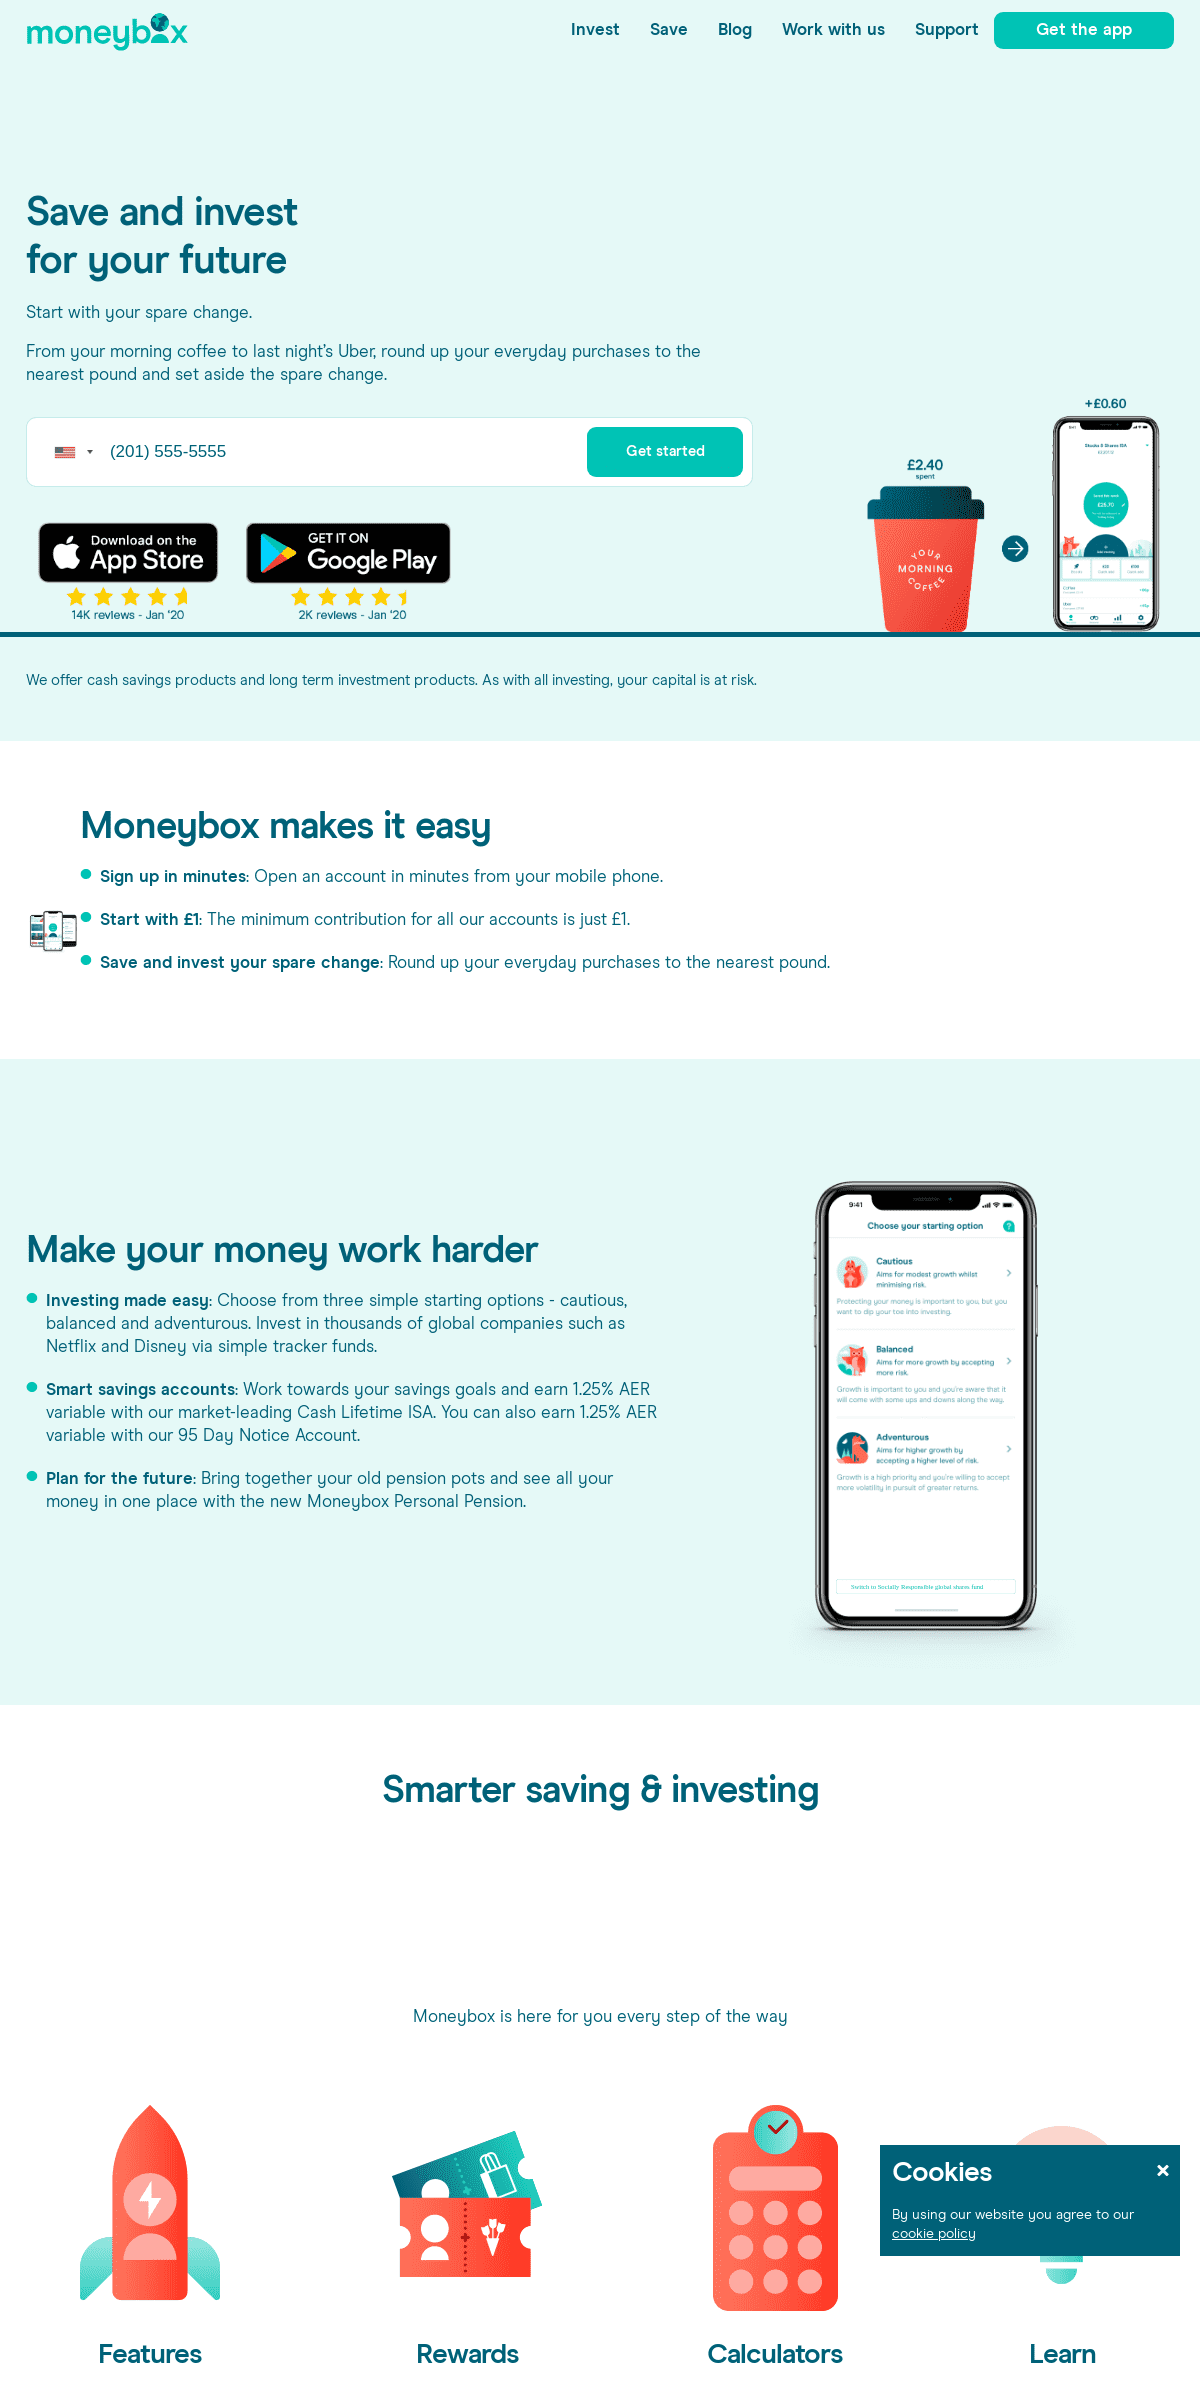 A complete backup of moneyboxapp.com